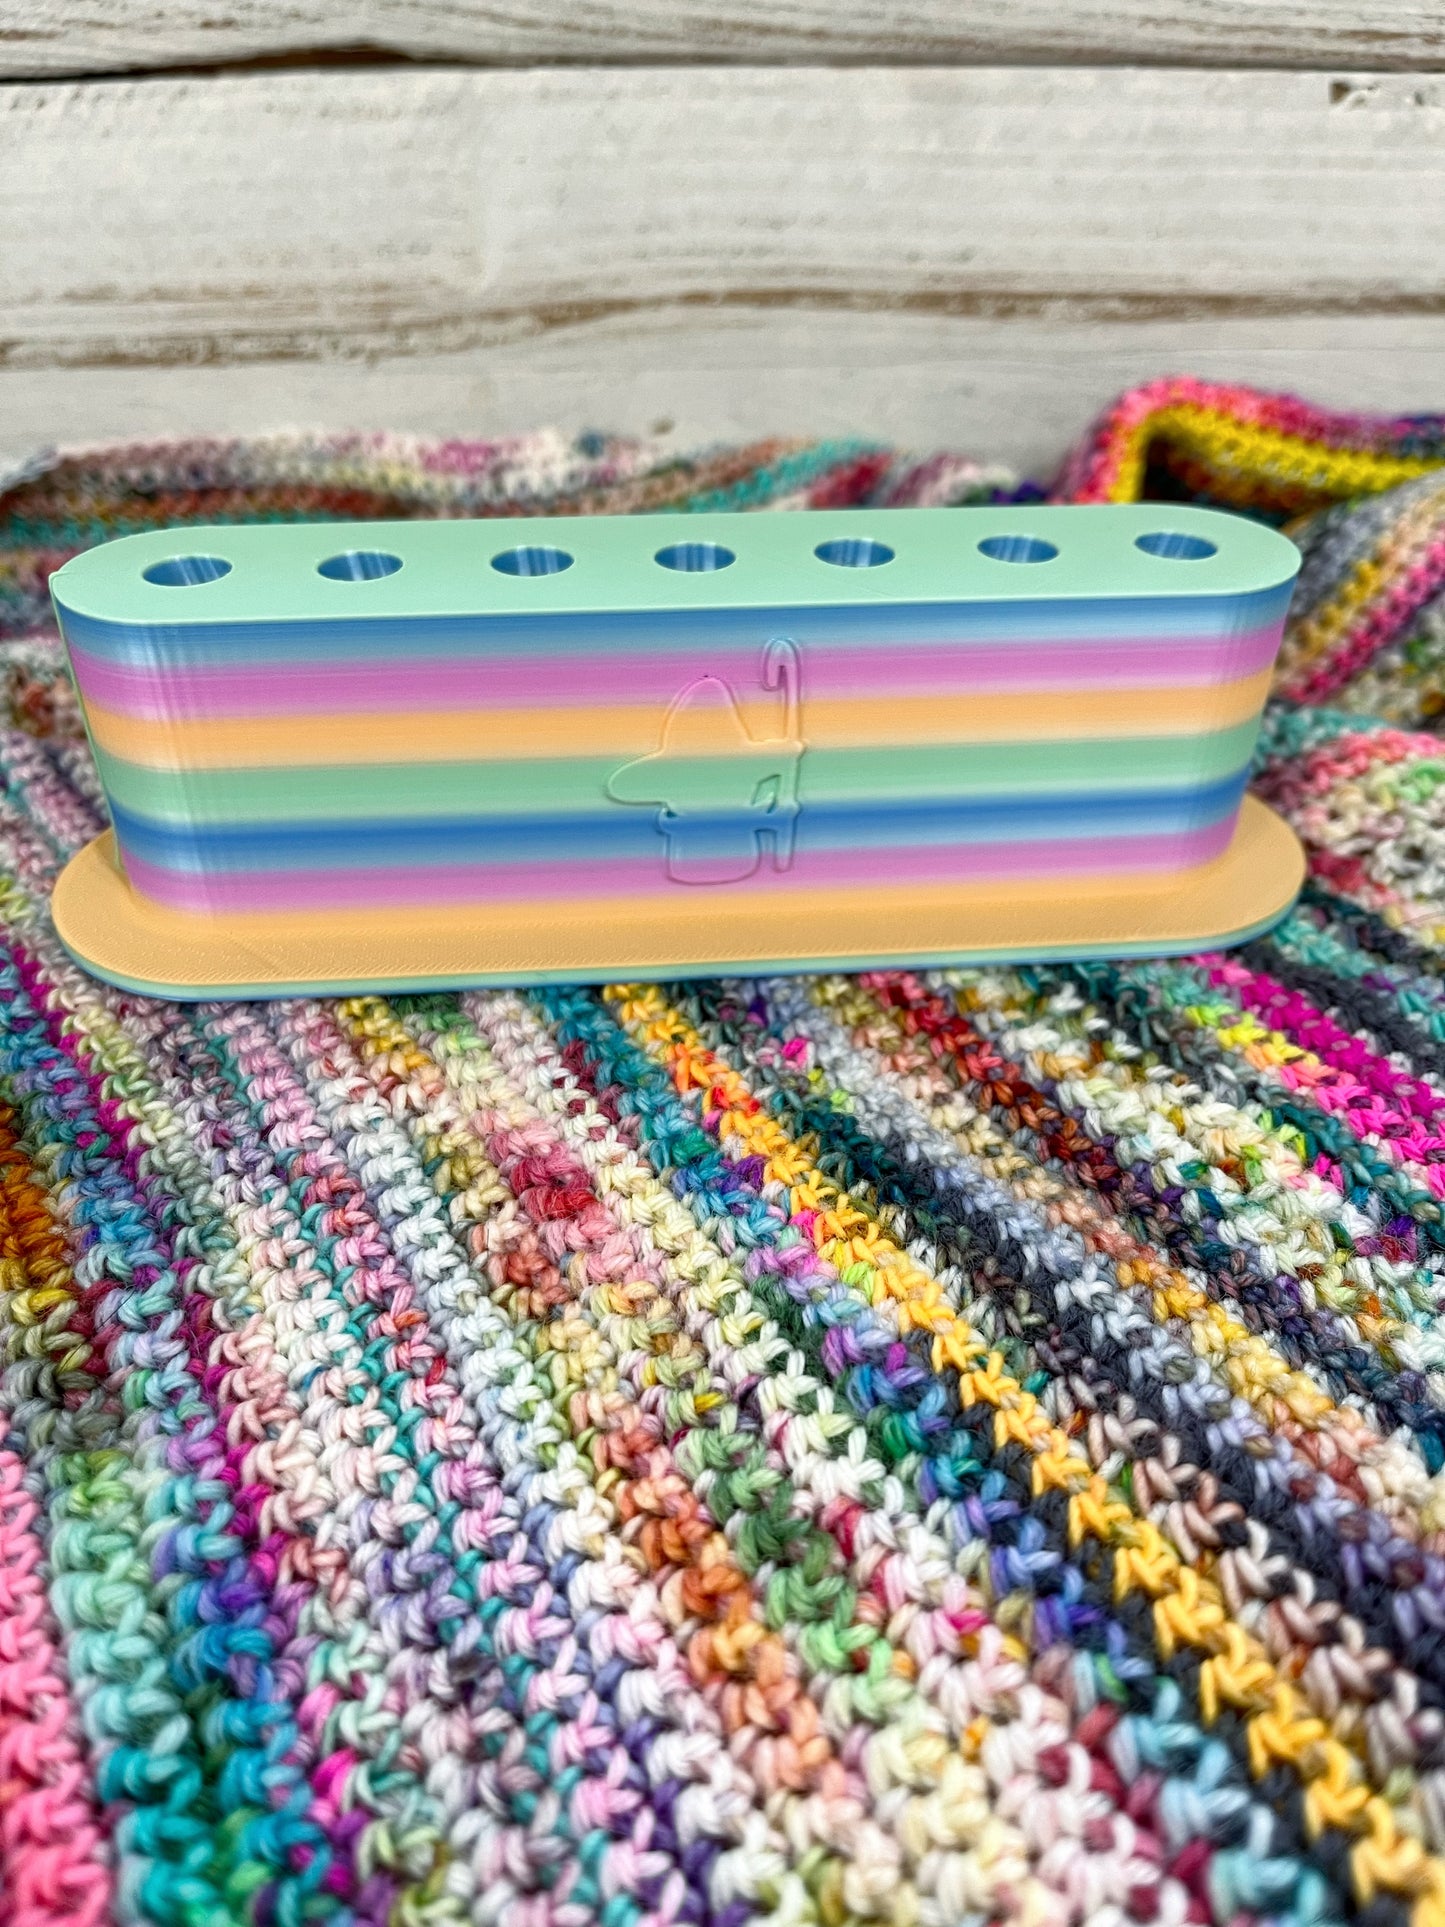 3D Printed Crochet Hook Holder, Crochet Hook Storage, Crochet Accessories